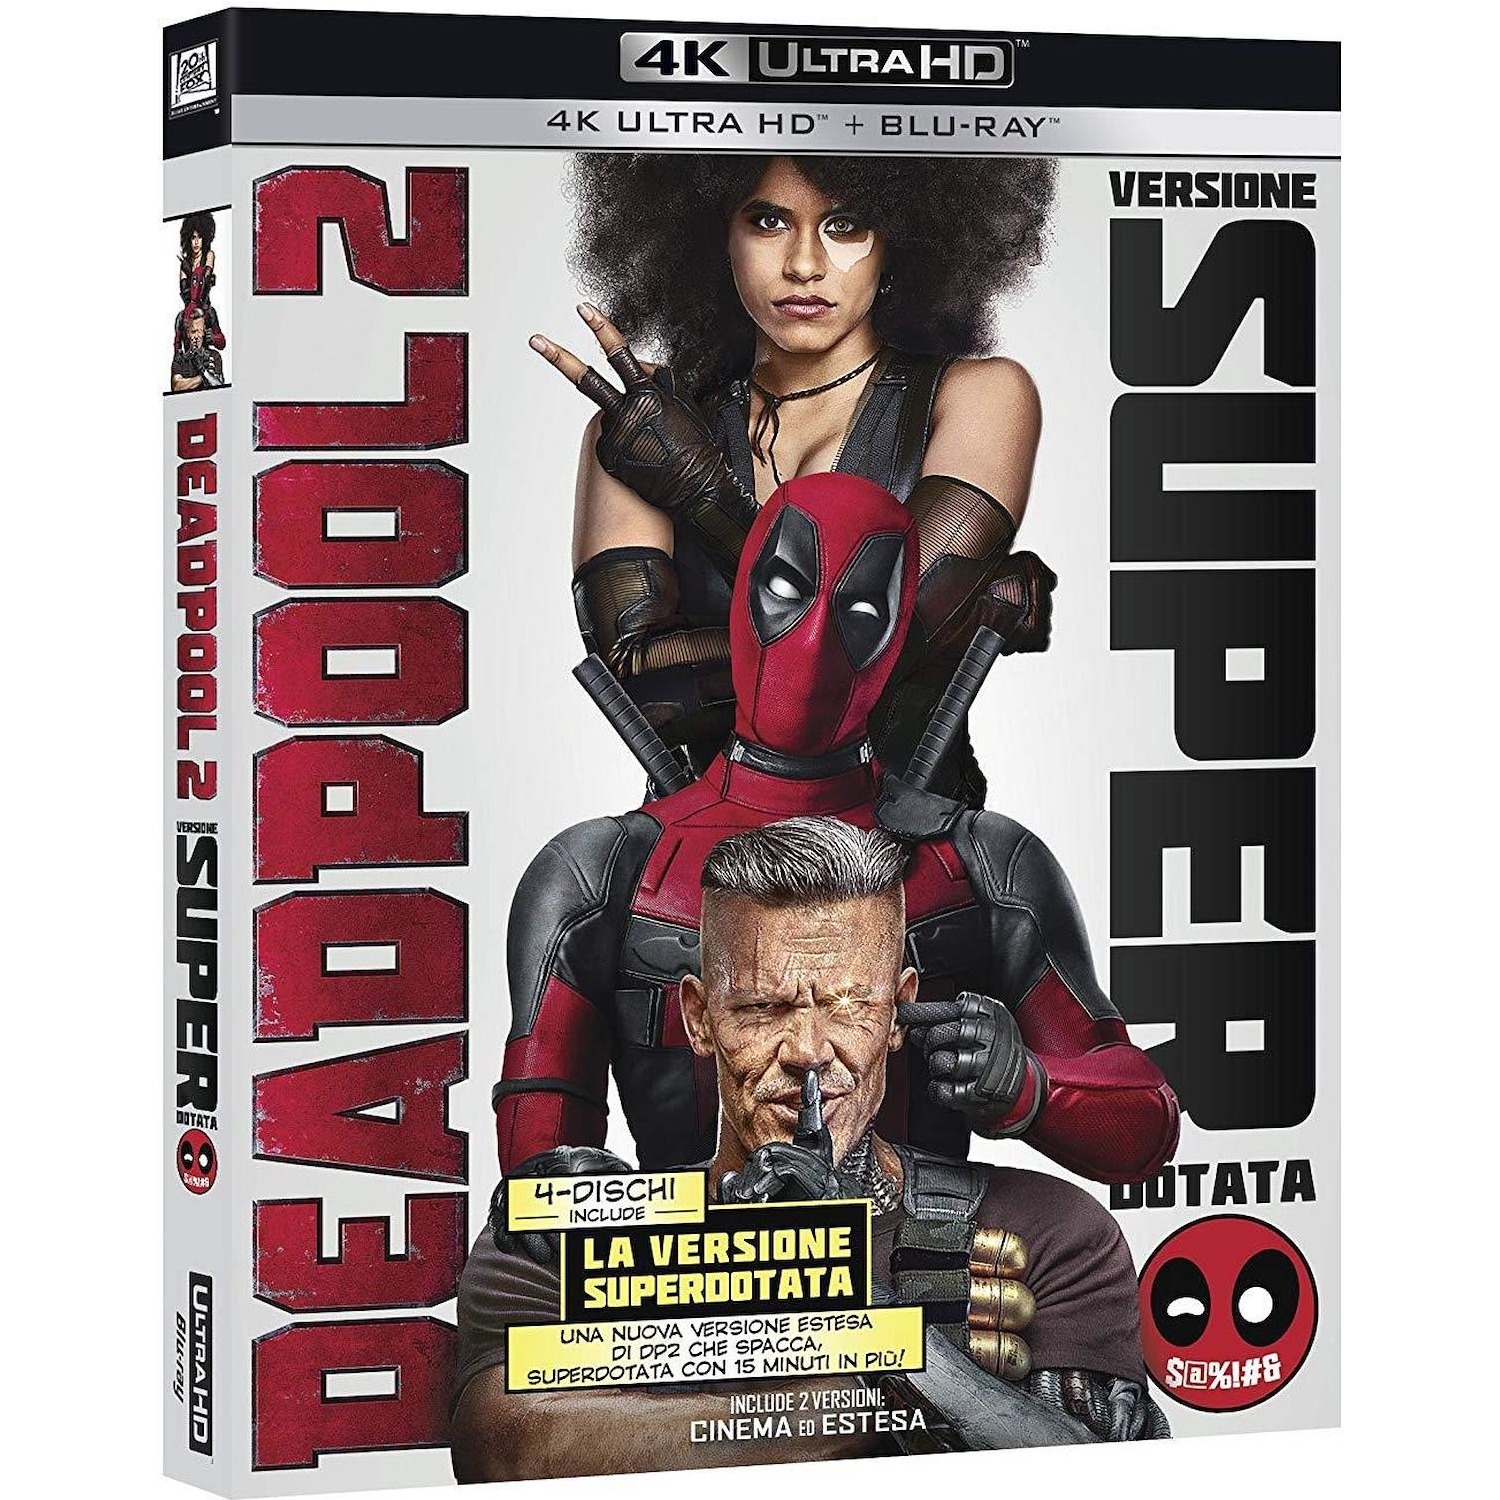 Immagine per Blu-ray 4K Deadpool 2 da DIMOStore